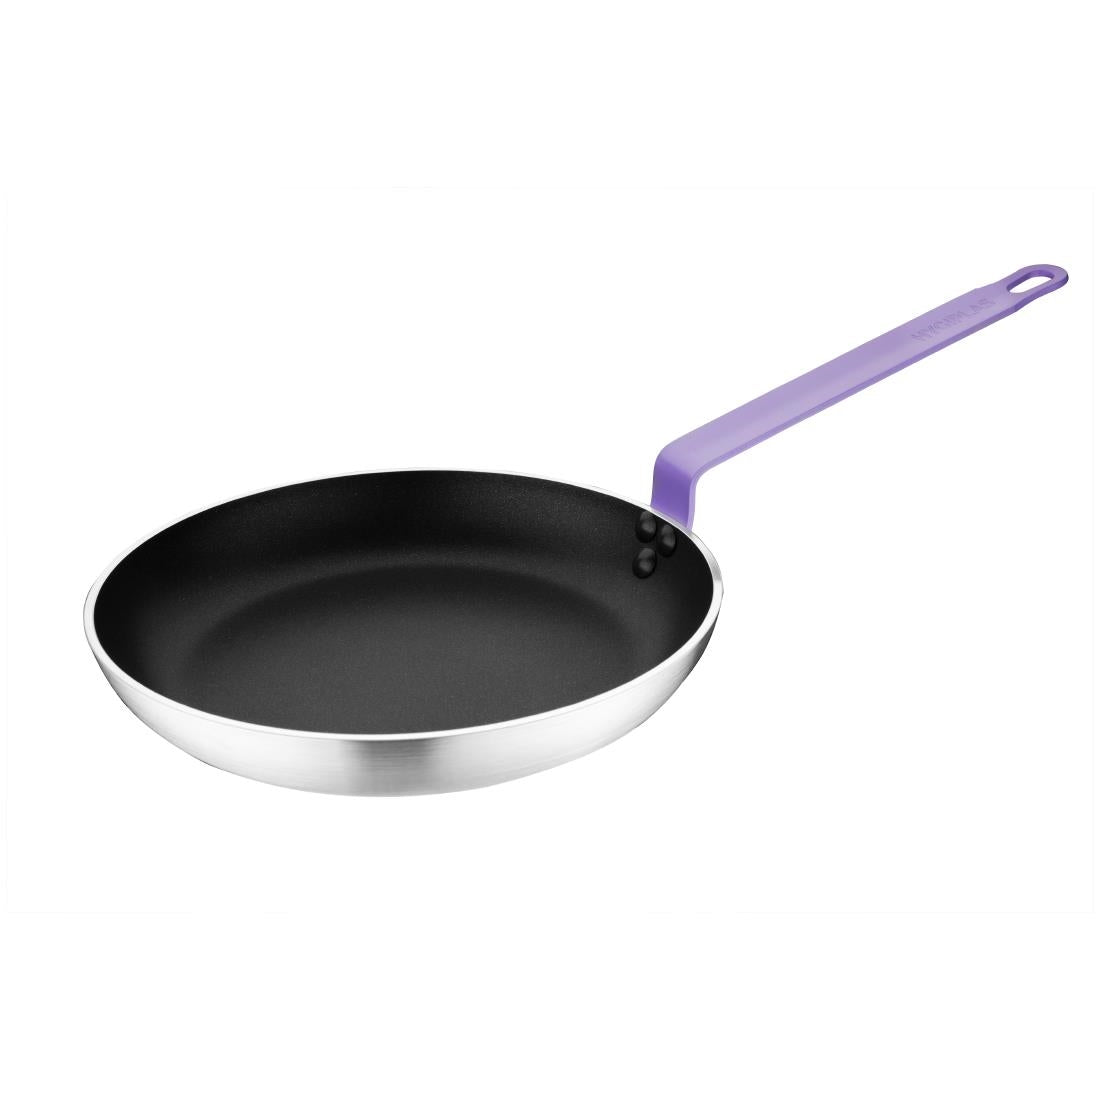 Hygiplas Aluminium Non-Stick Teflon Platinum Plus Frying Pan with Purple Handle 28cm